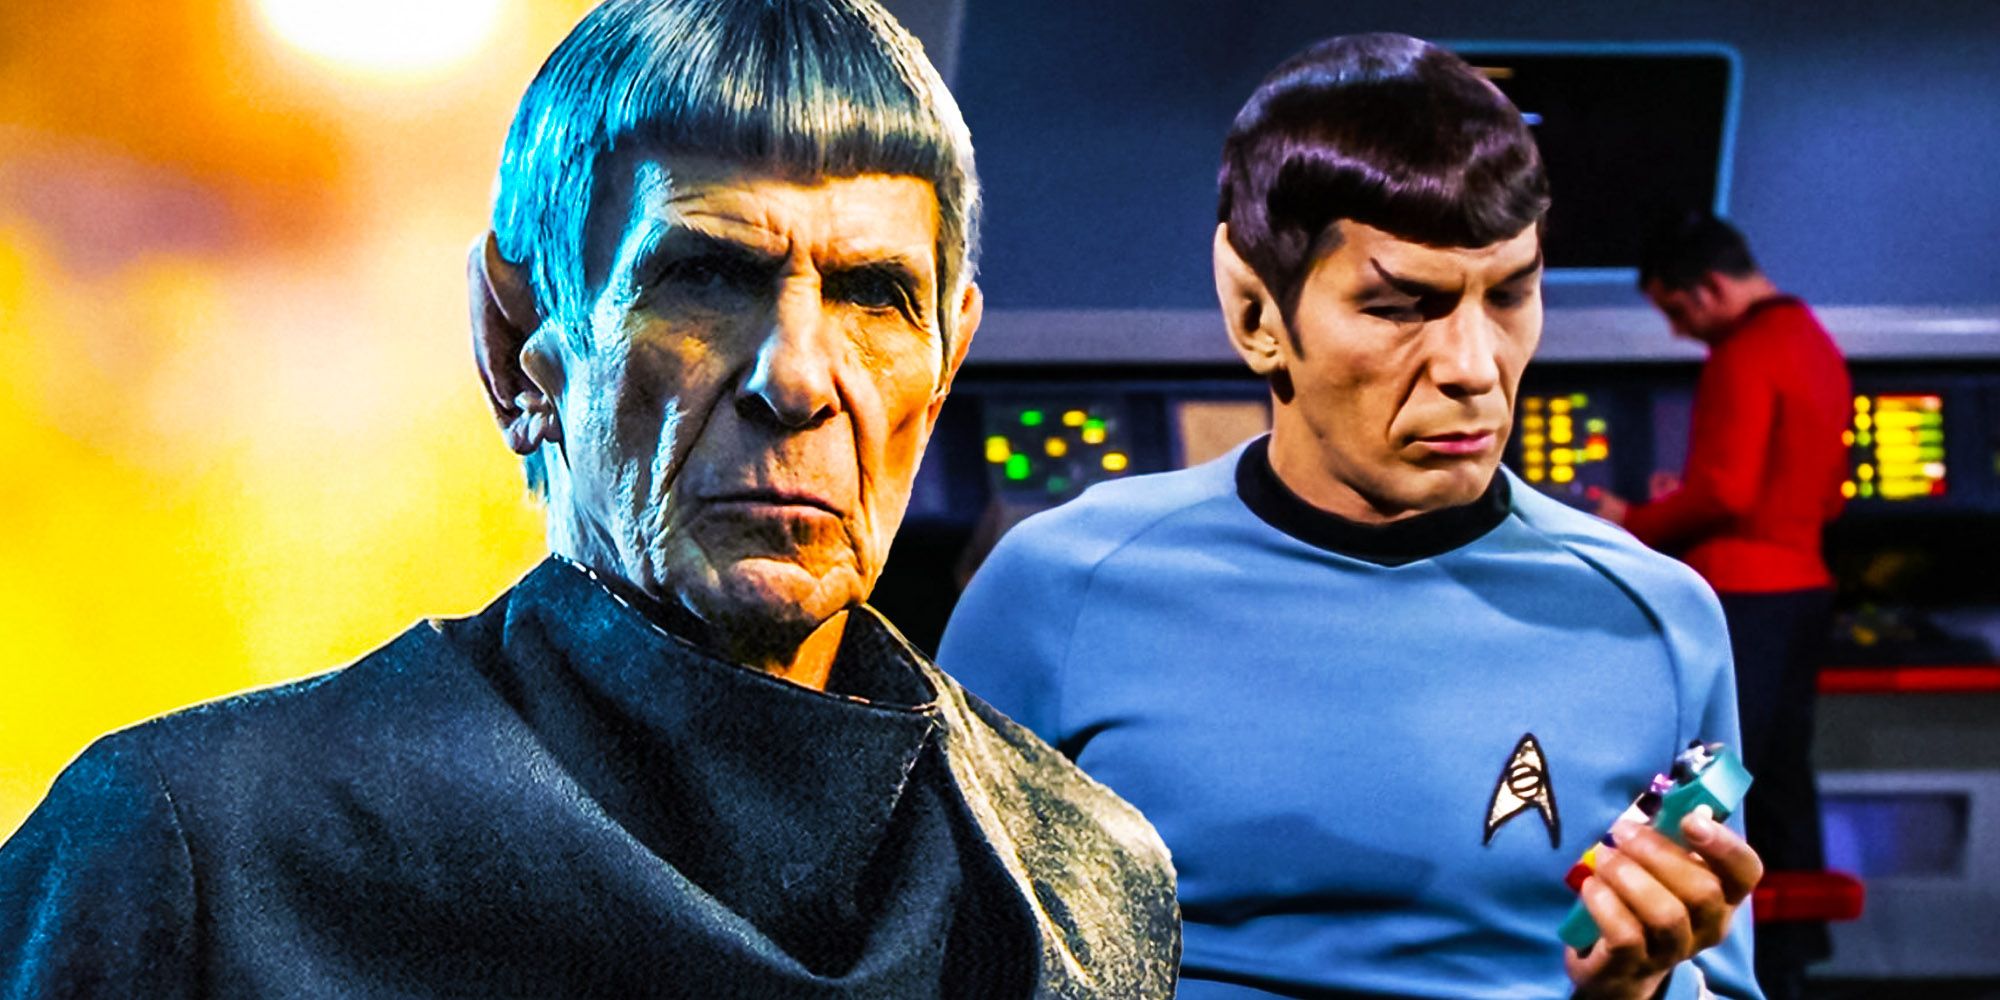 Leonard Nimoy's Spock from both Star Trek: The Original Series and Star Trek (2009).